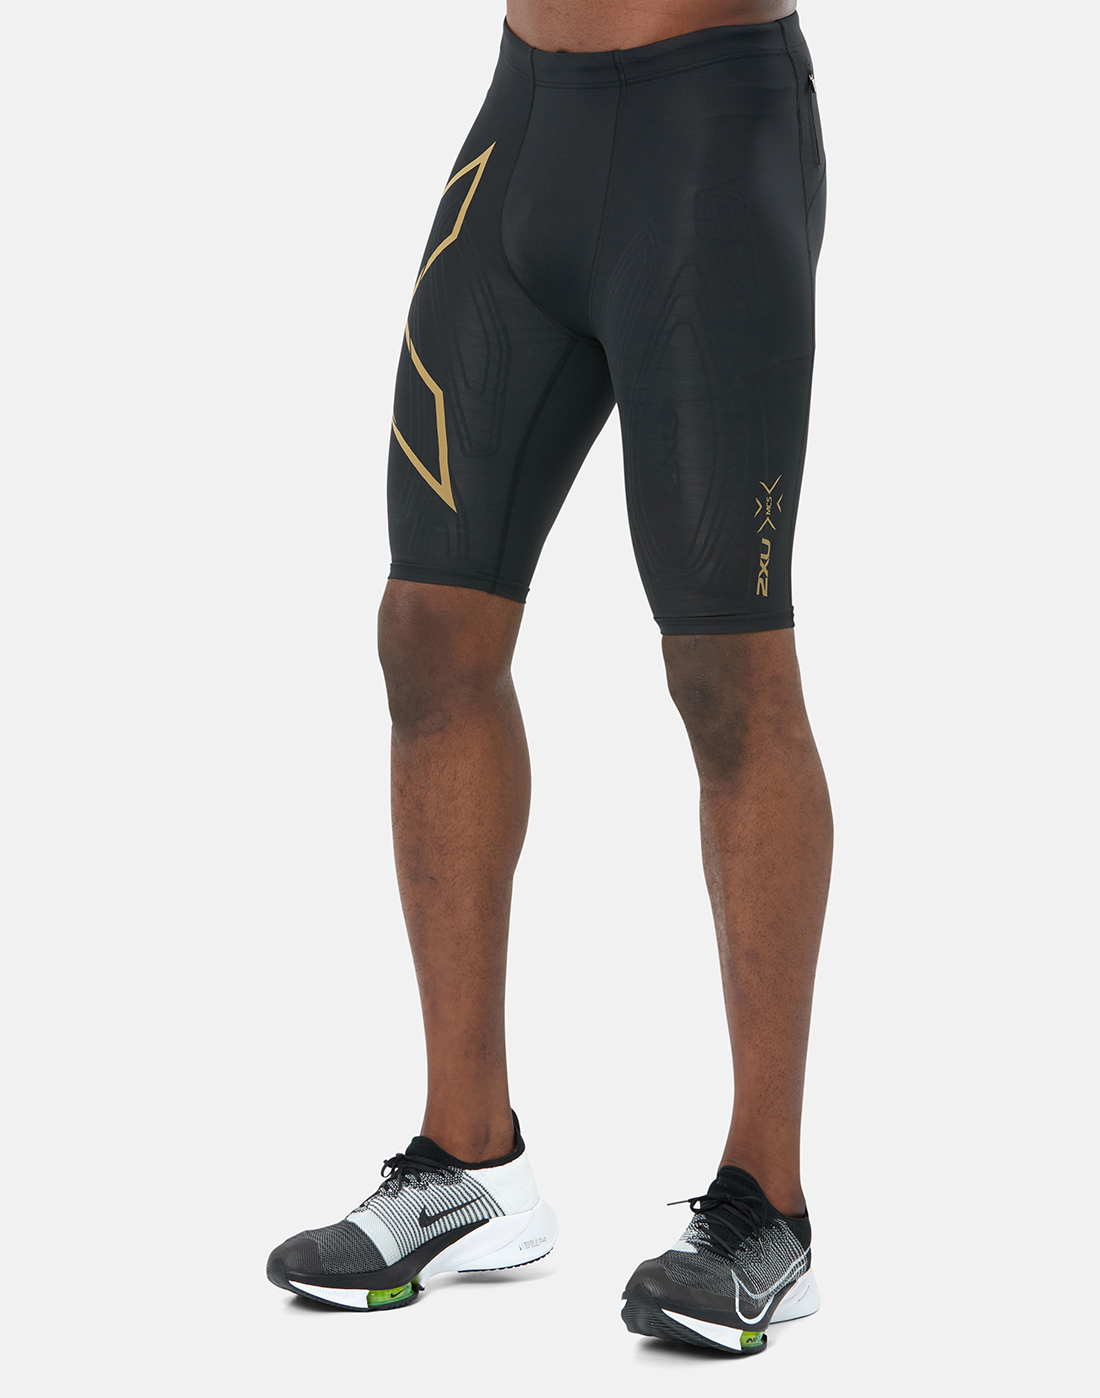 2XU Mens Light Speed Compression Shorts - Black